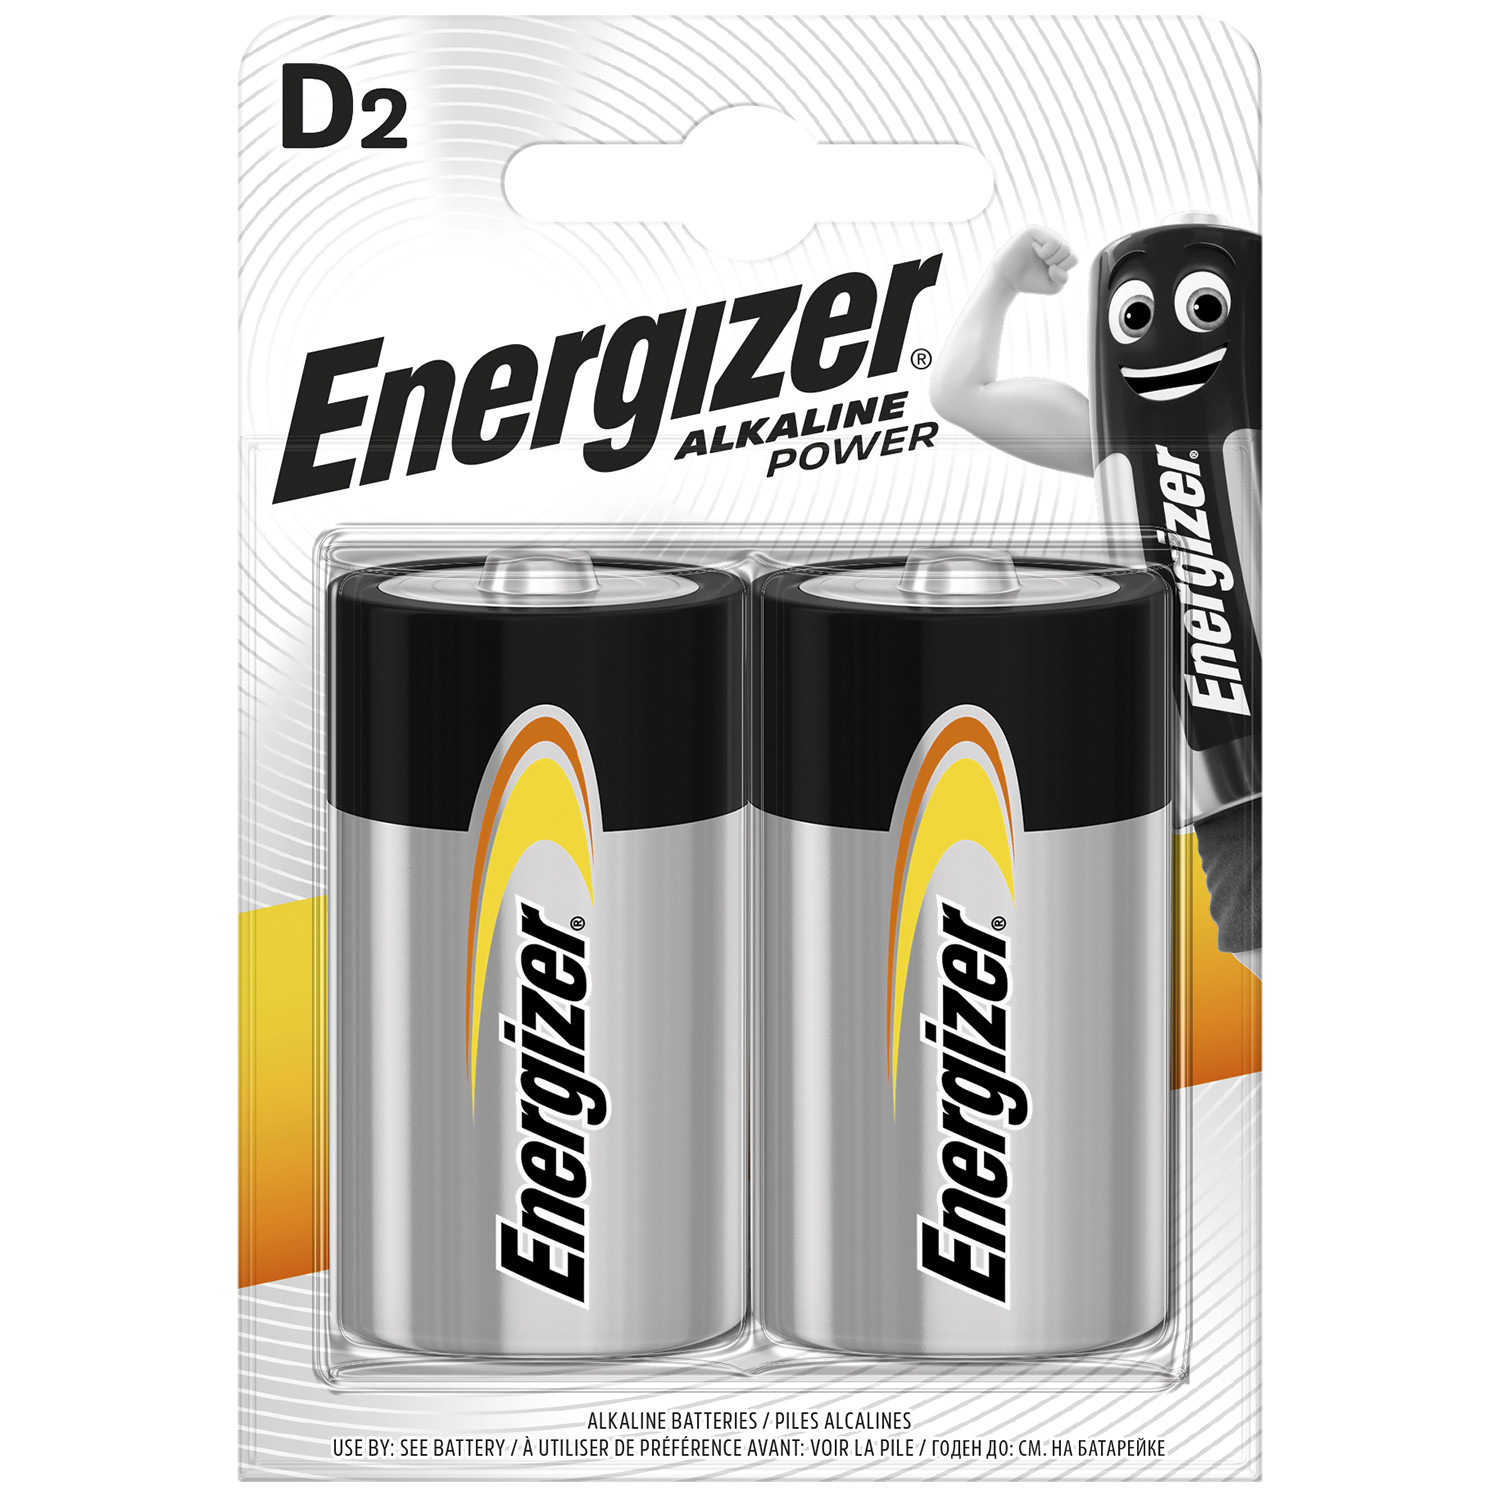 Energizer 2 Pack Alkaline Power D Batteries Image